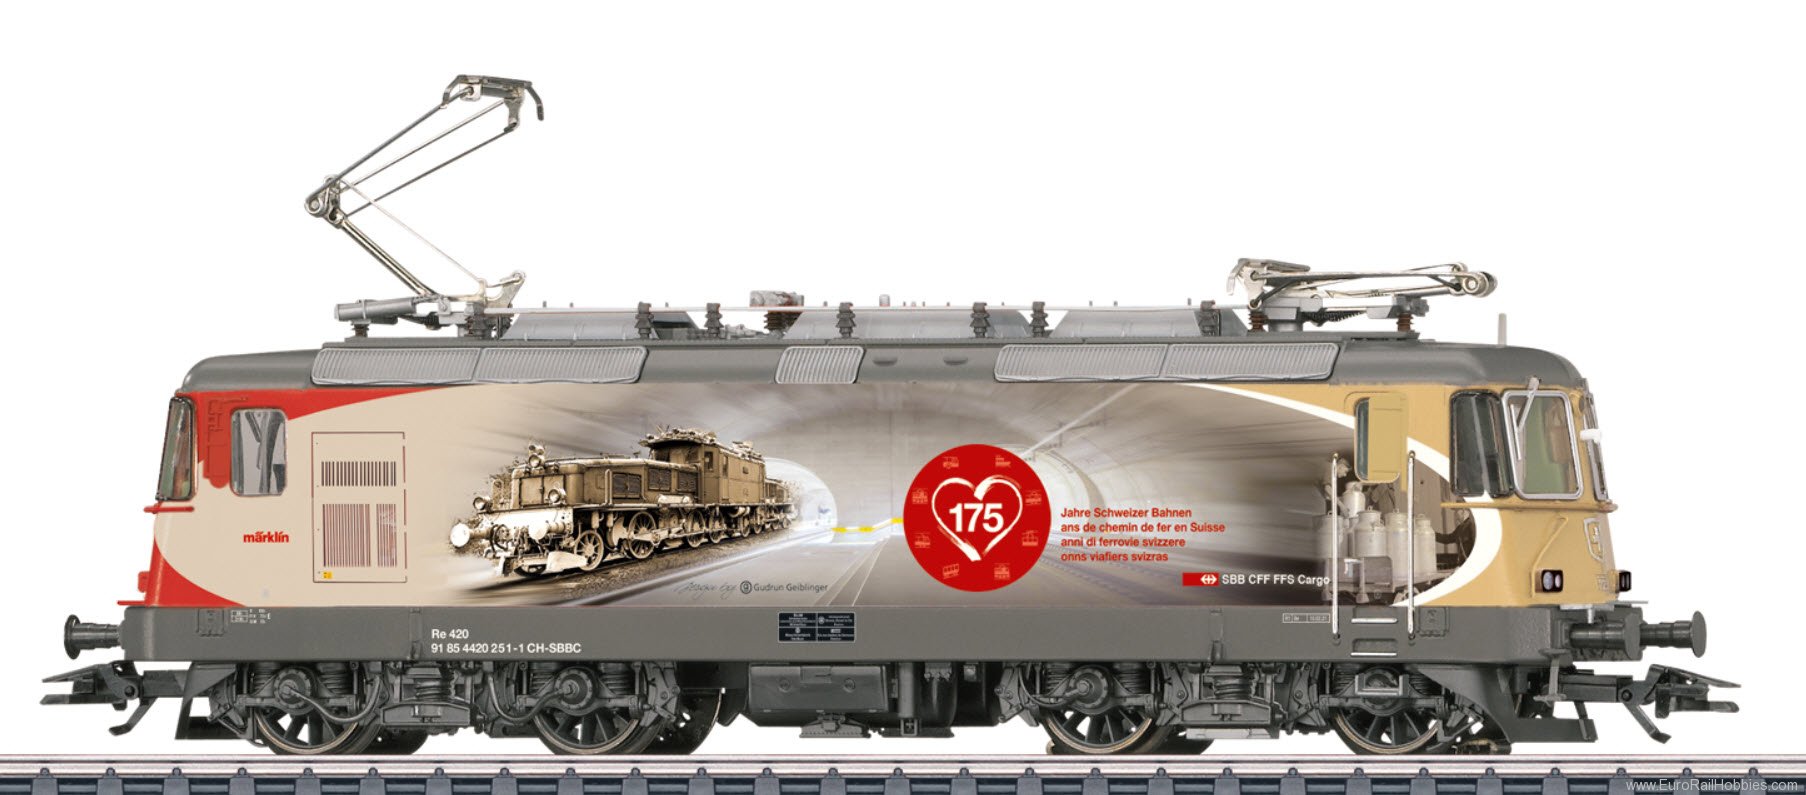 Marklin 37875 SBB 420 Electric Locomotive - 175 Years Swiss